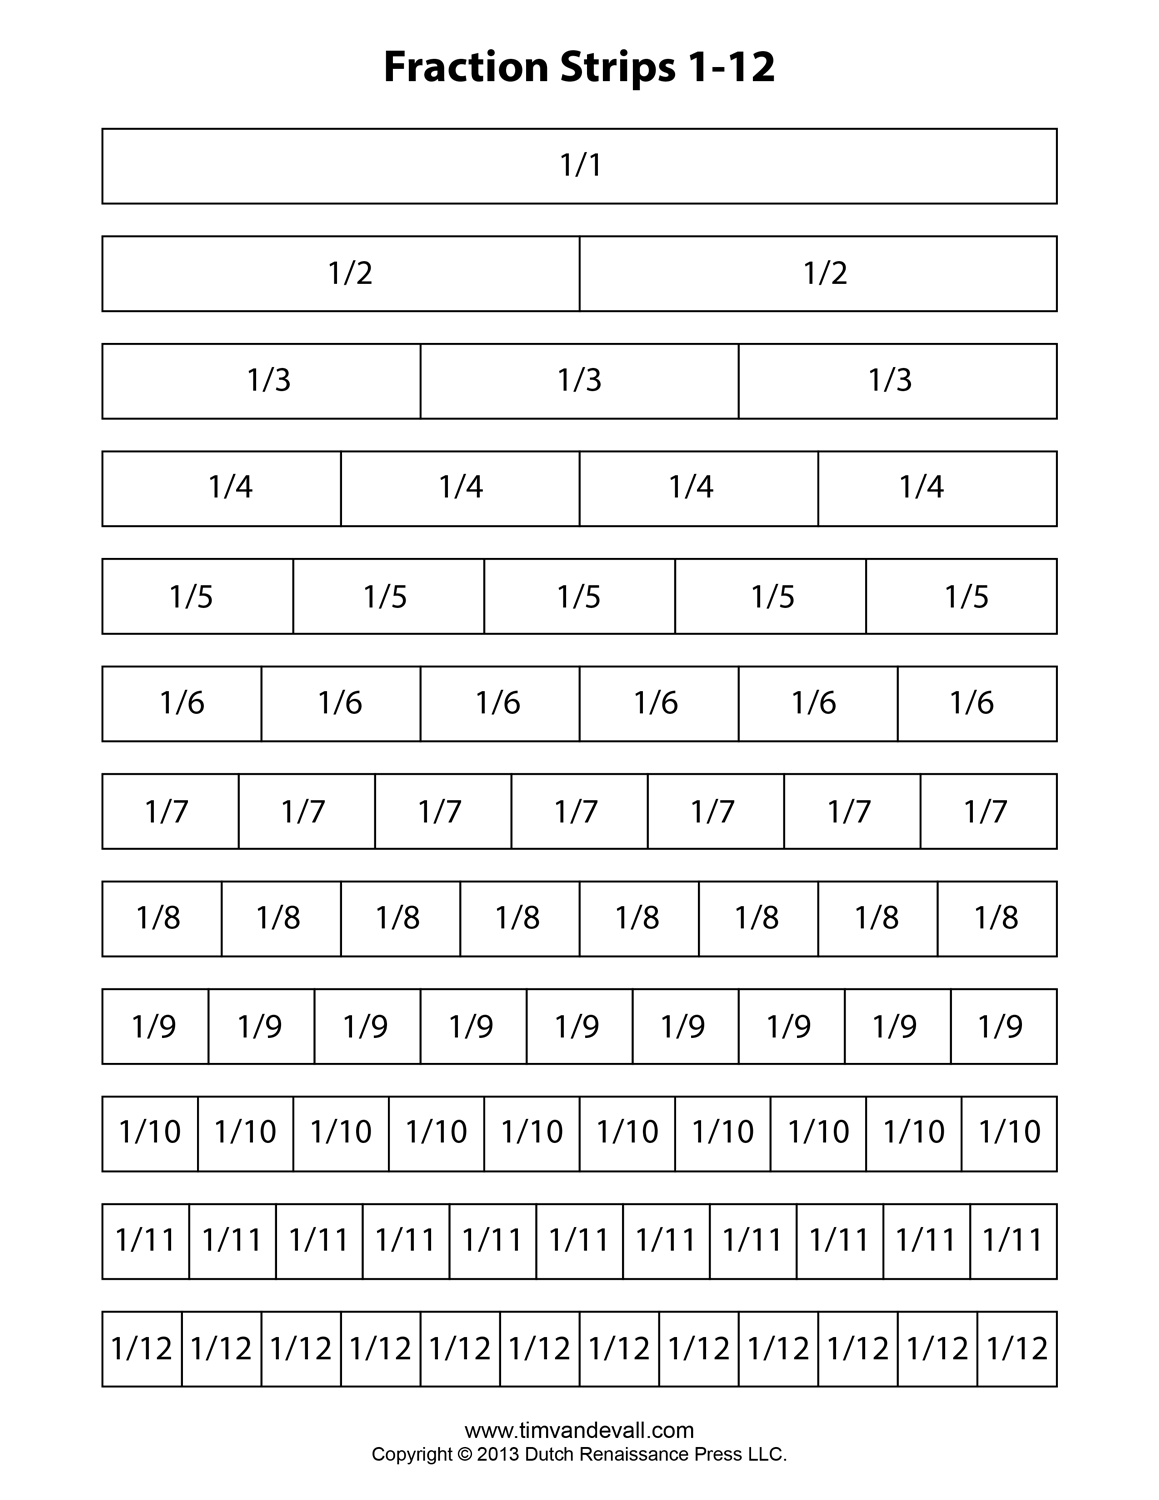 Free printable fraction strip